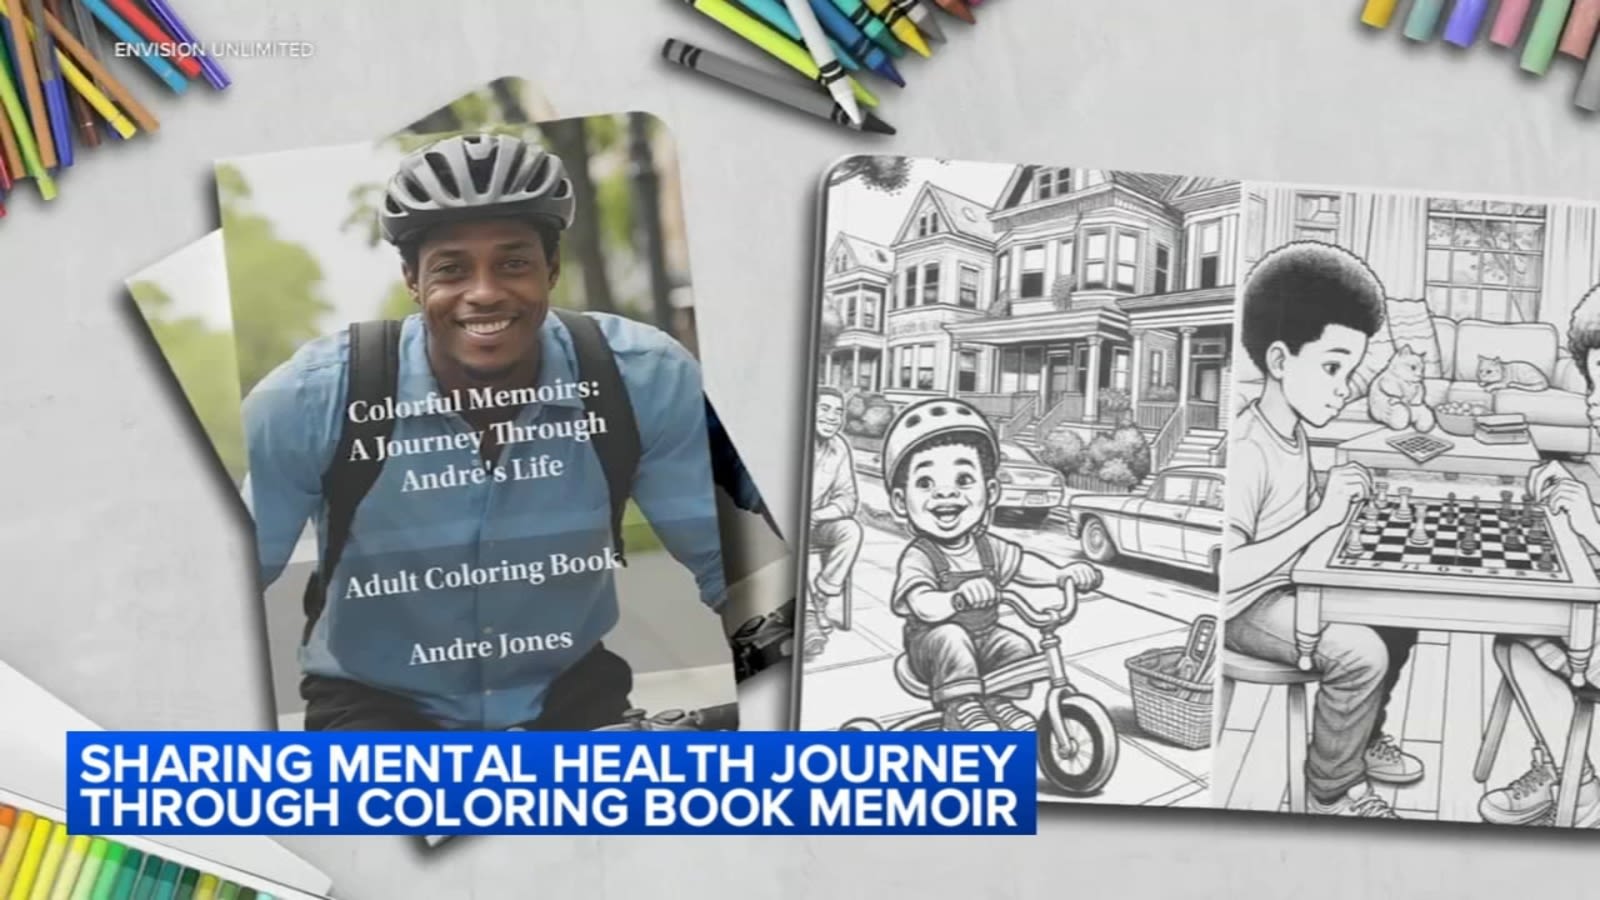 Chicago man shares mental health journey through coloring book memoir